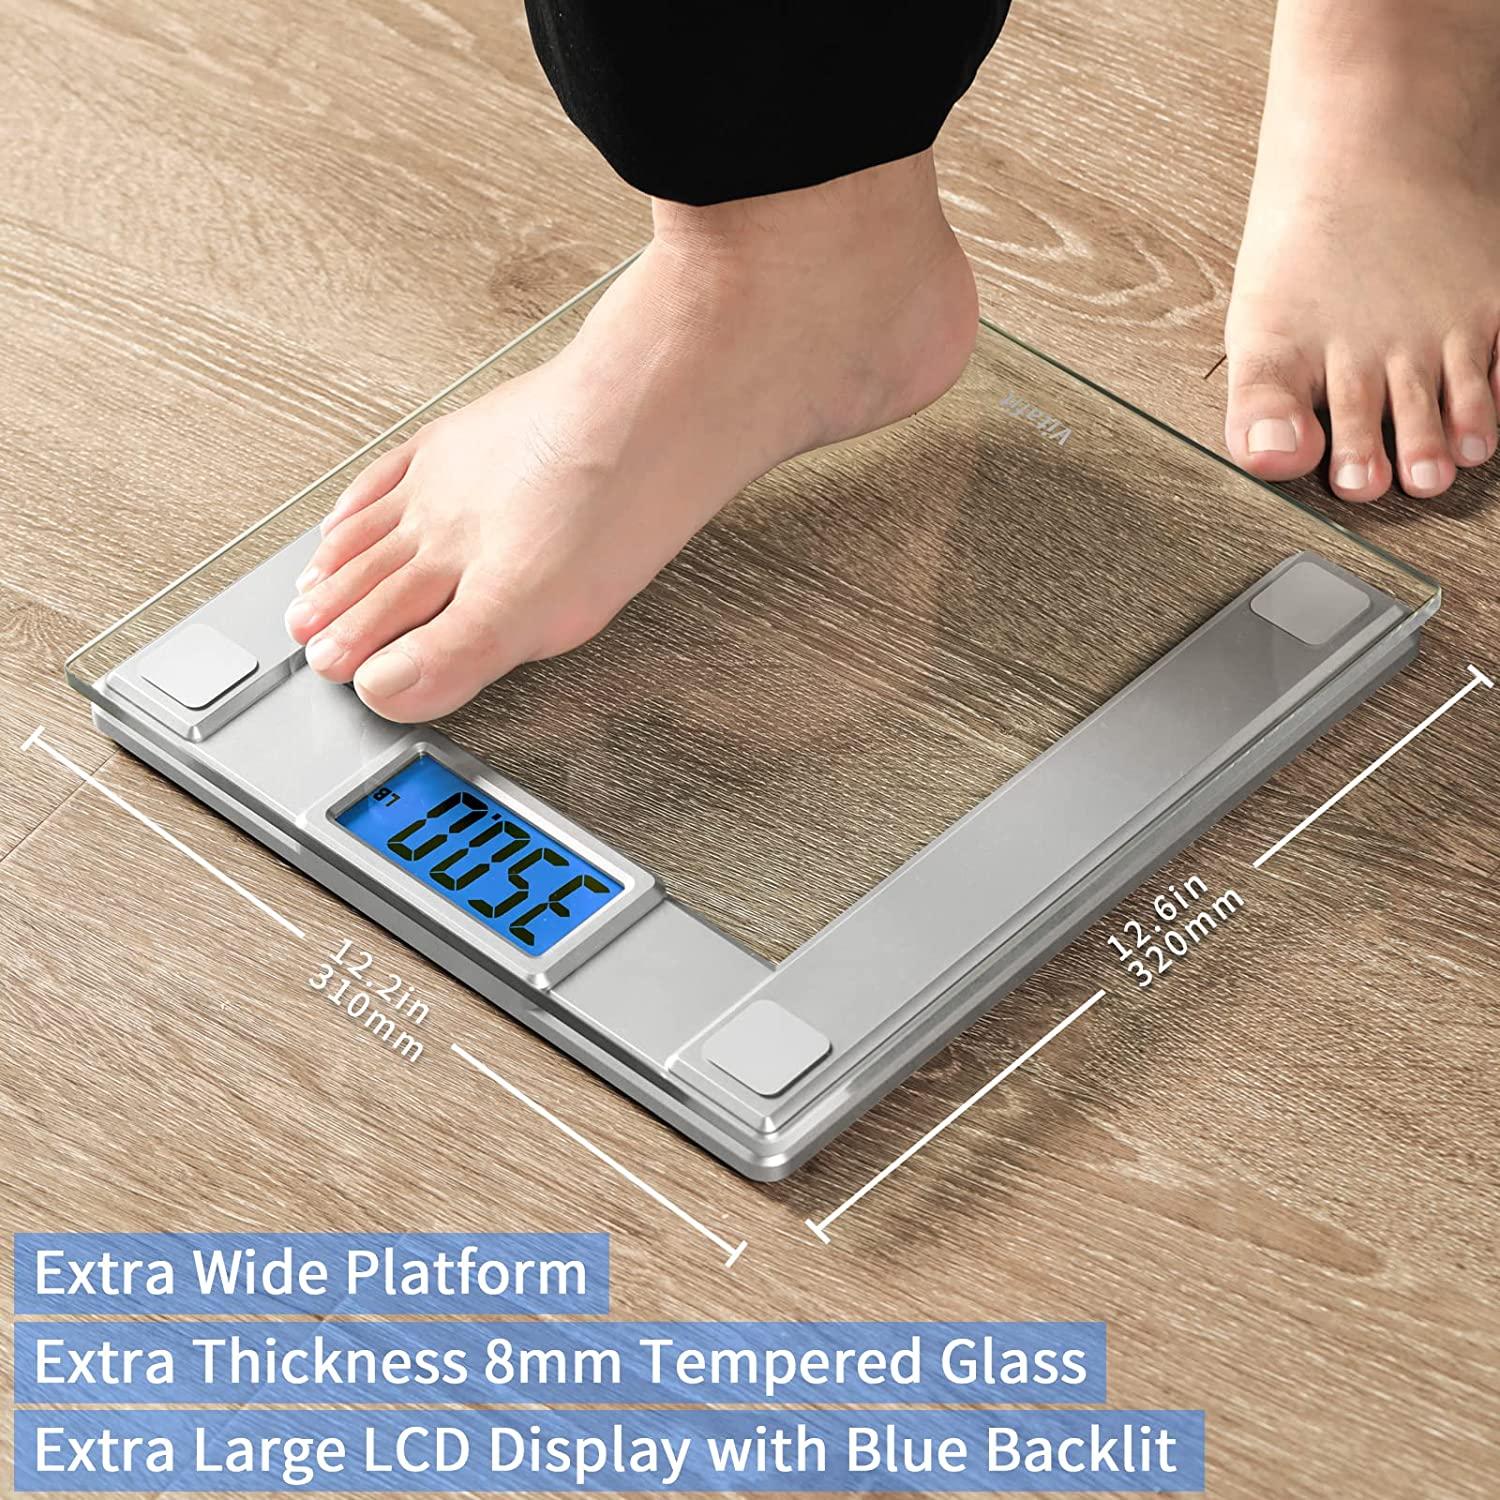 Vitafit Digital Body Weight Bathroom Scale,Weighing Professional